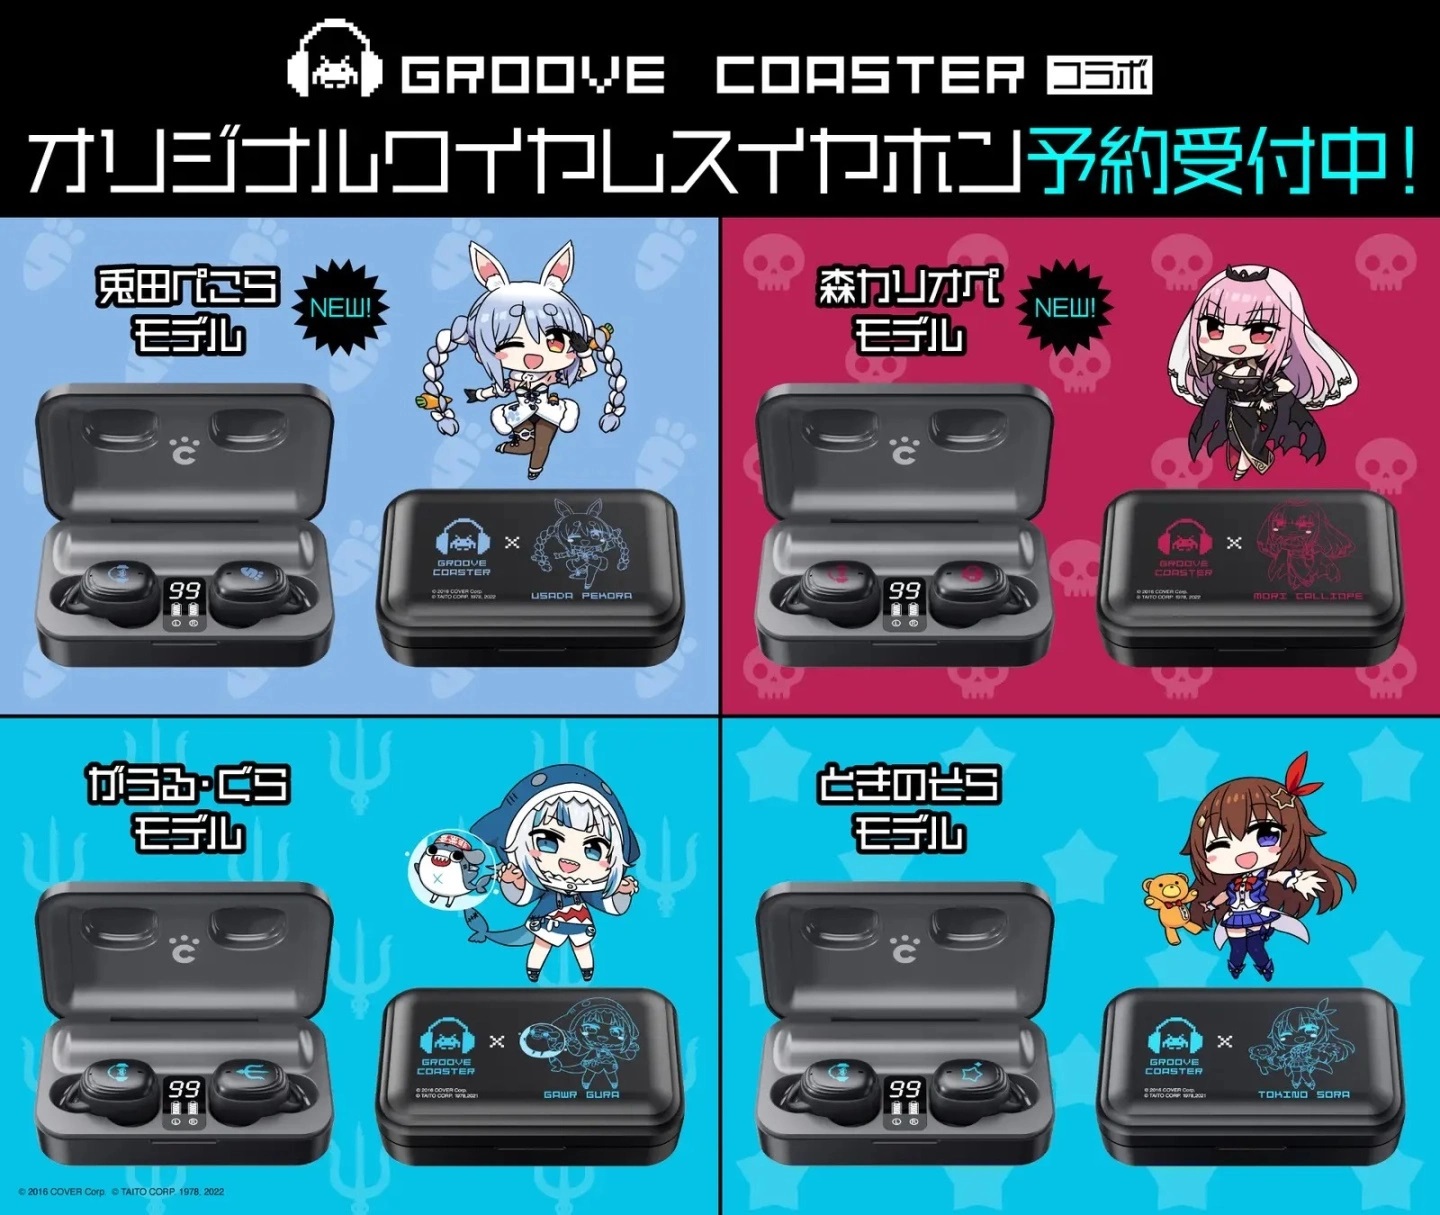 《Groove Coaster WaiWaiParty!!!!》將與人氣 Vtuber 兔田佩克拉＆森美聲推出合作活動